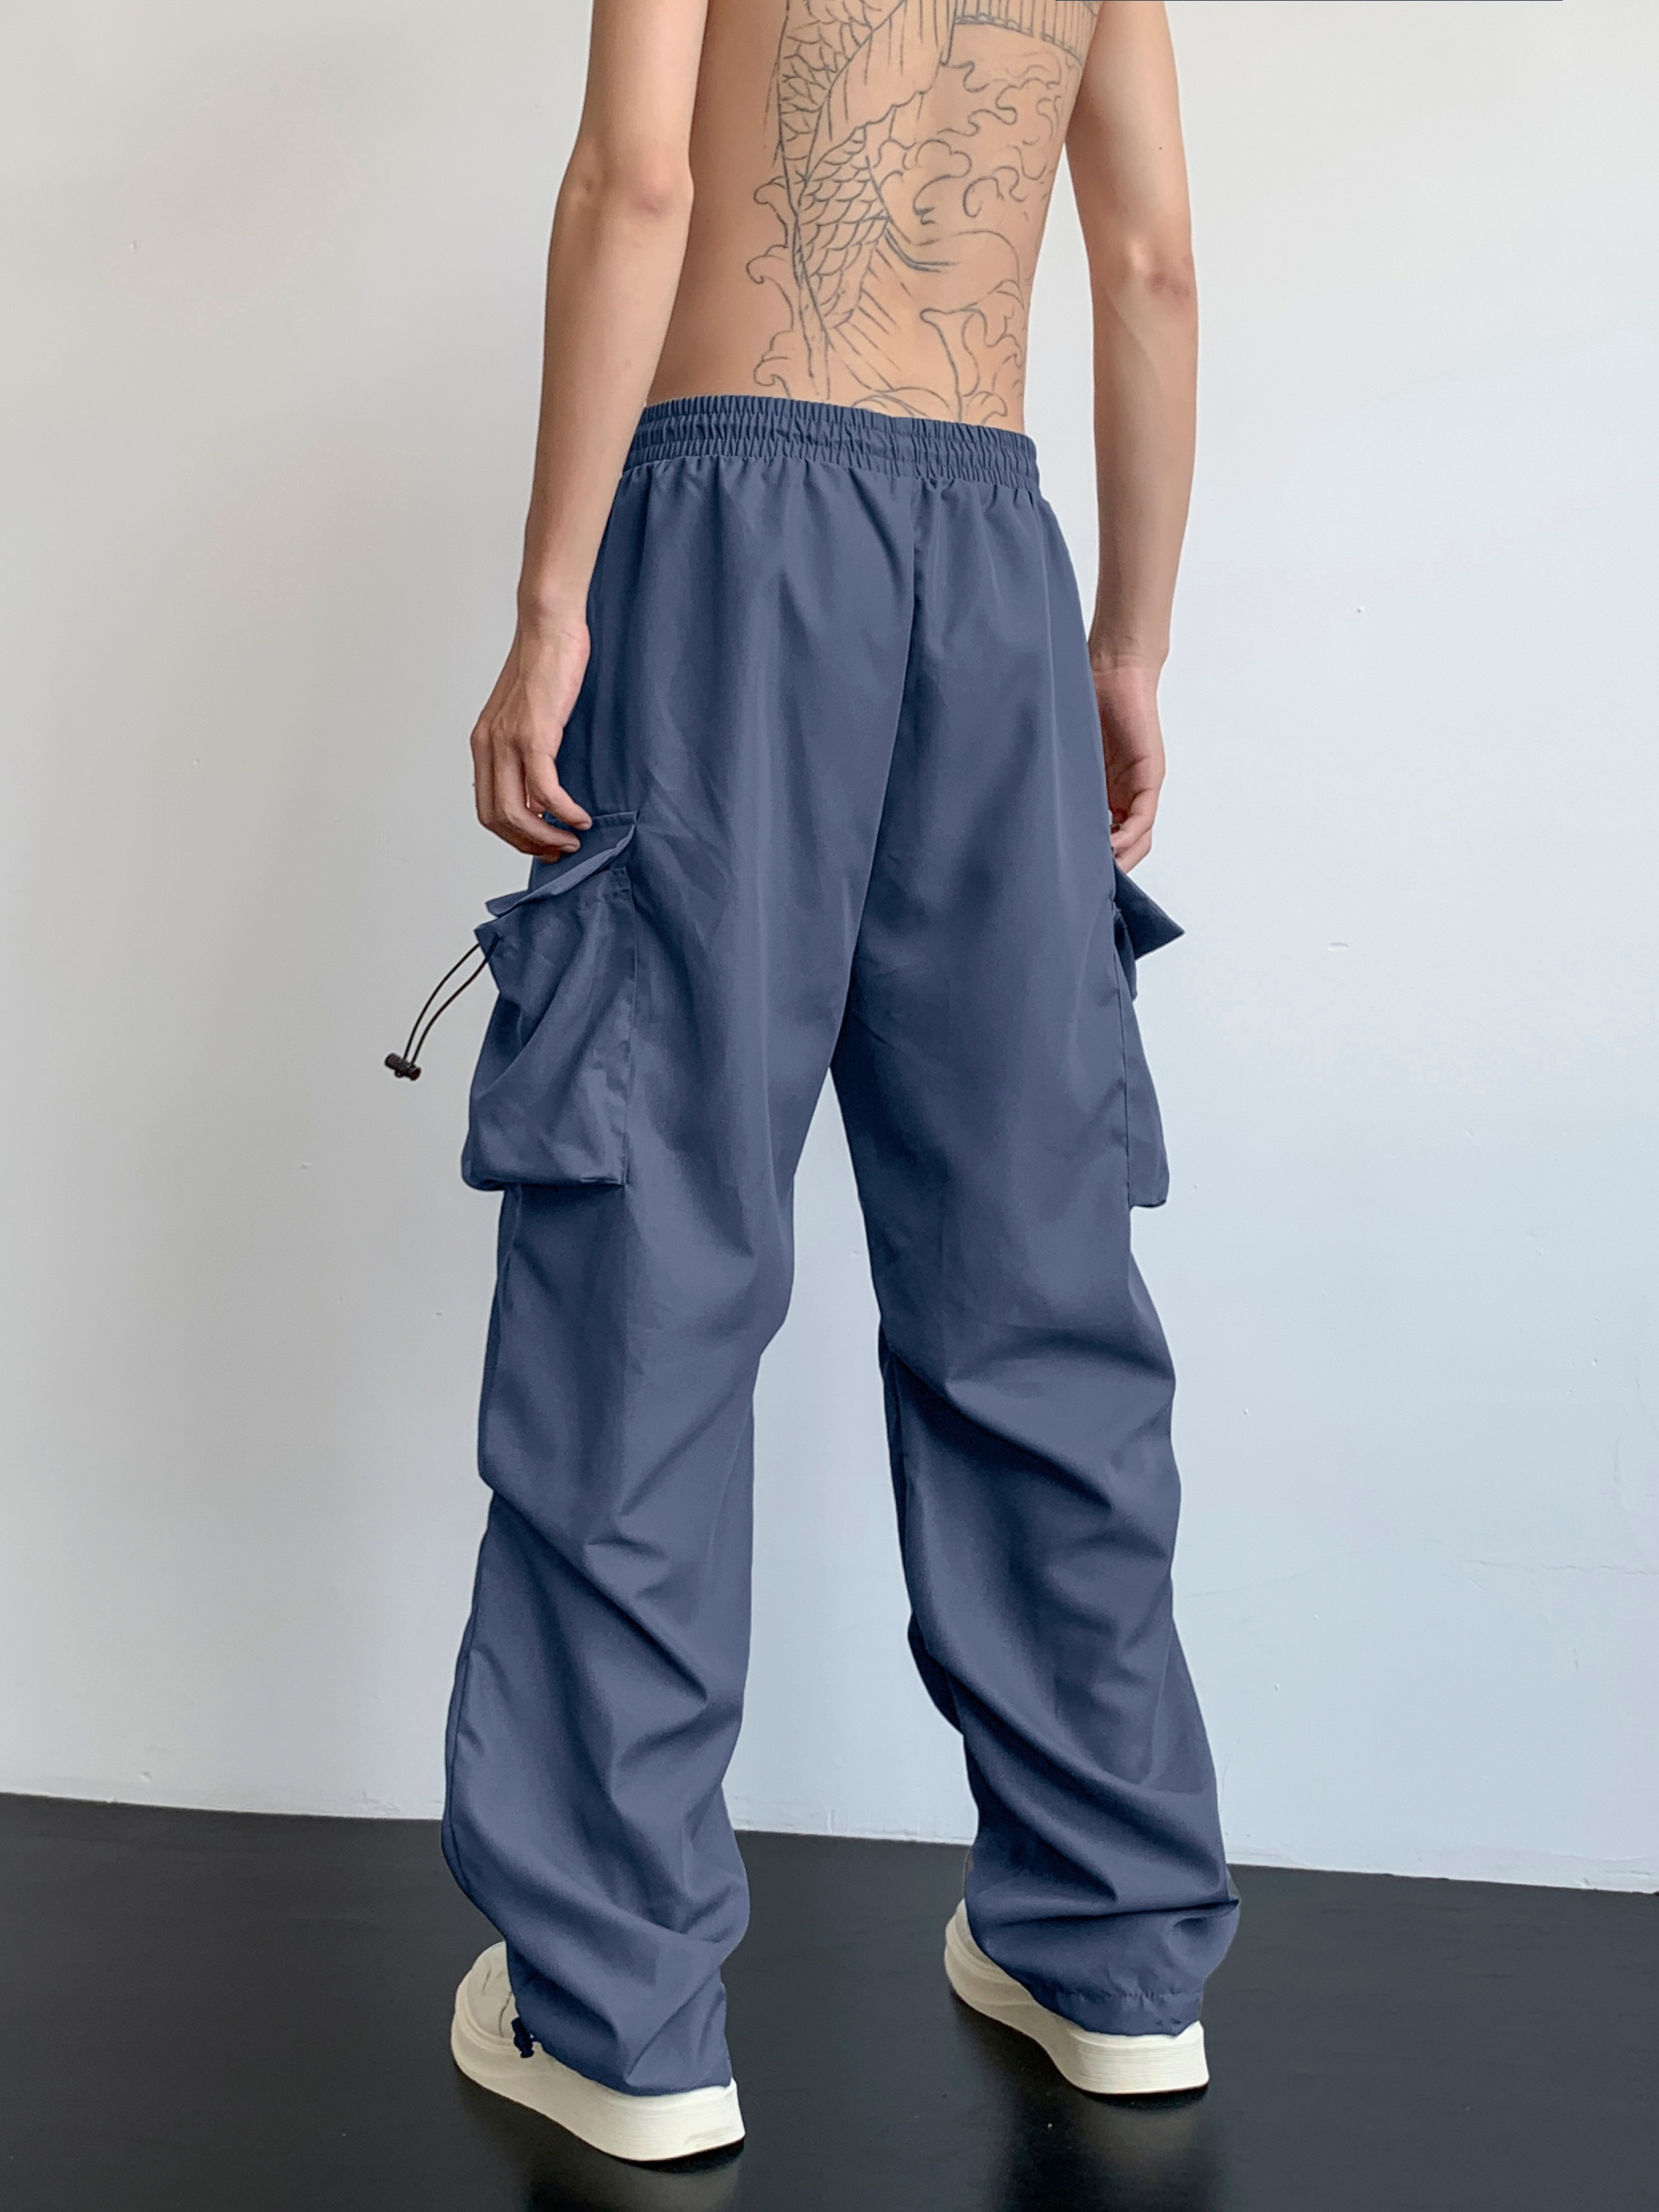 Stretch Cargo Pants for Women Solid Elastic Waist Denim Work Pants Multi  Pockets Comfy Streetwear Jogger Pants Loose Pants(XL,Coffee) 